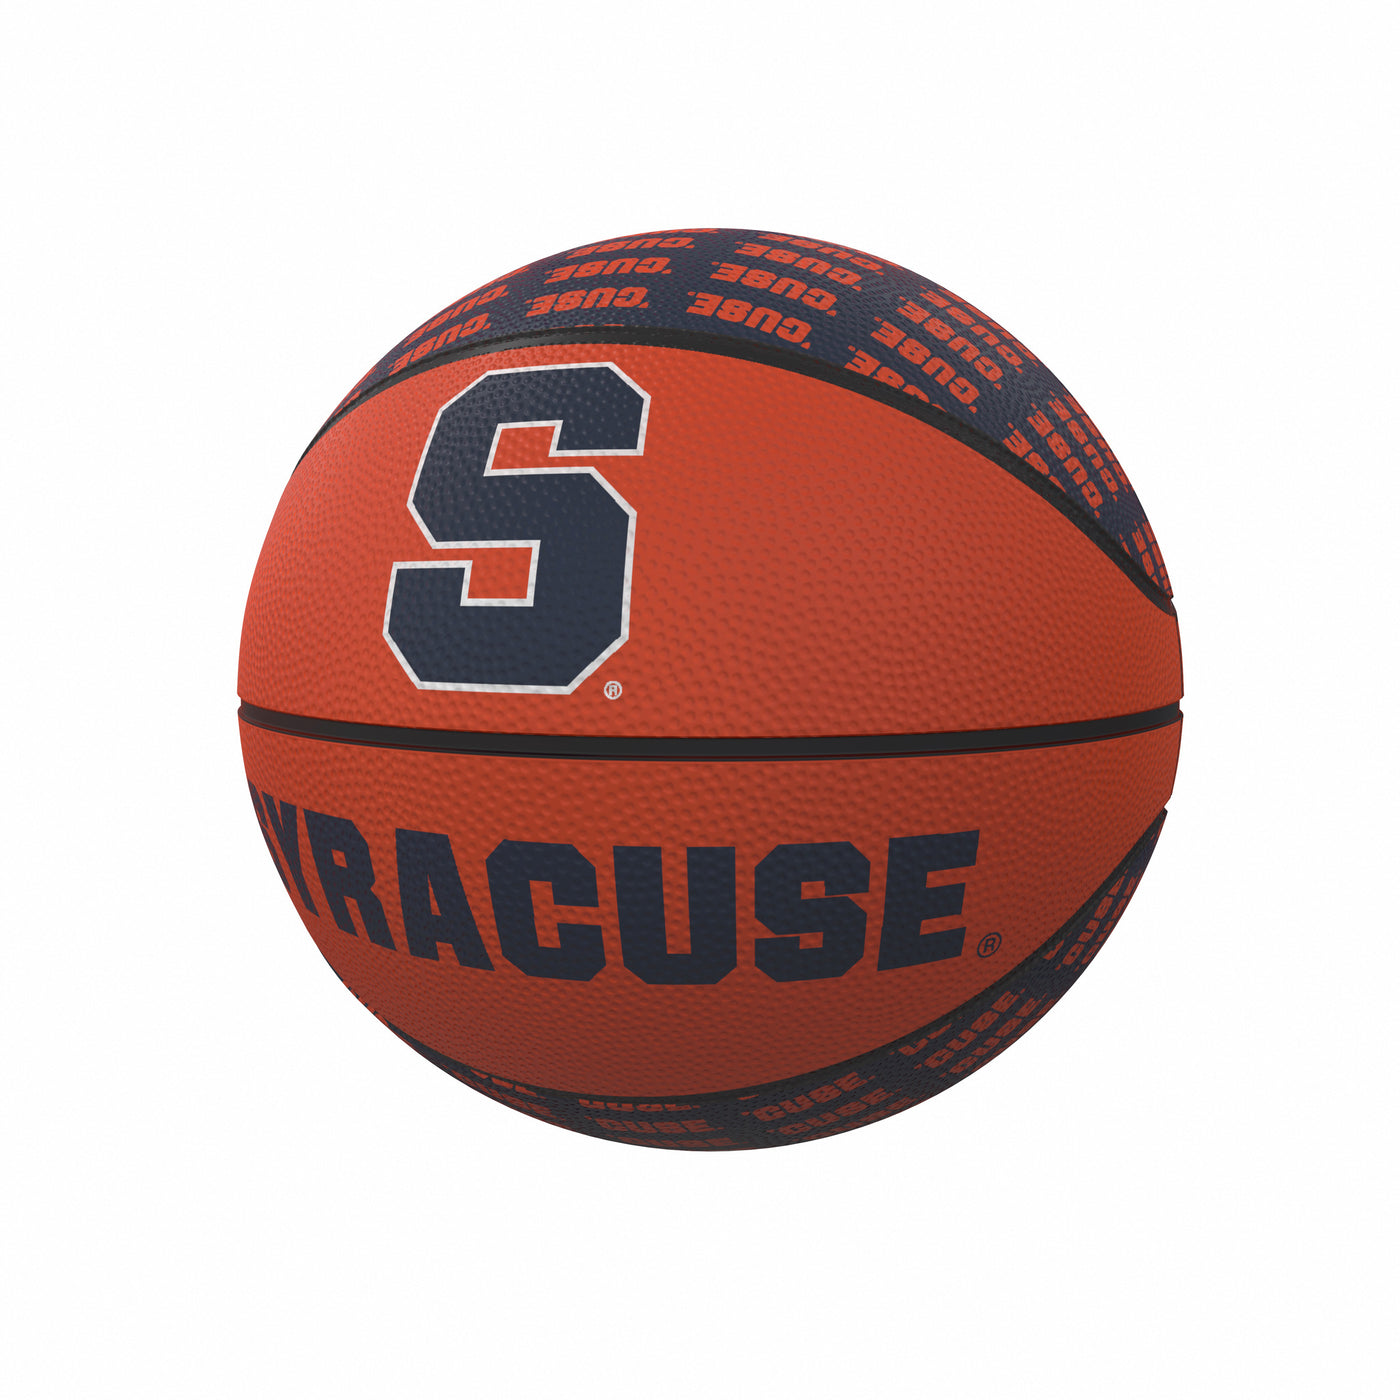 Syracuse Repeating Logo Mini-Size Rubber Basketball